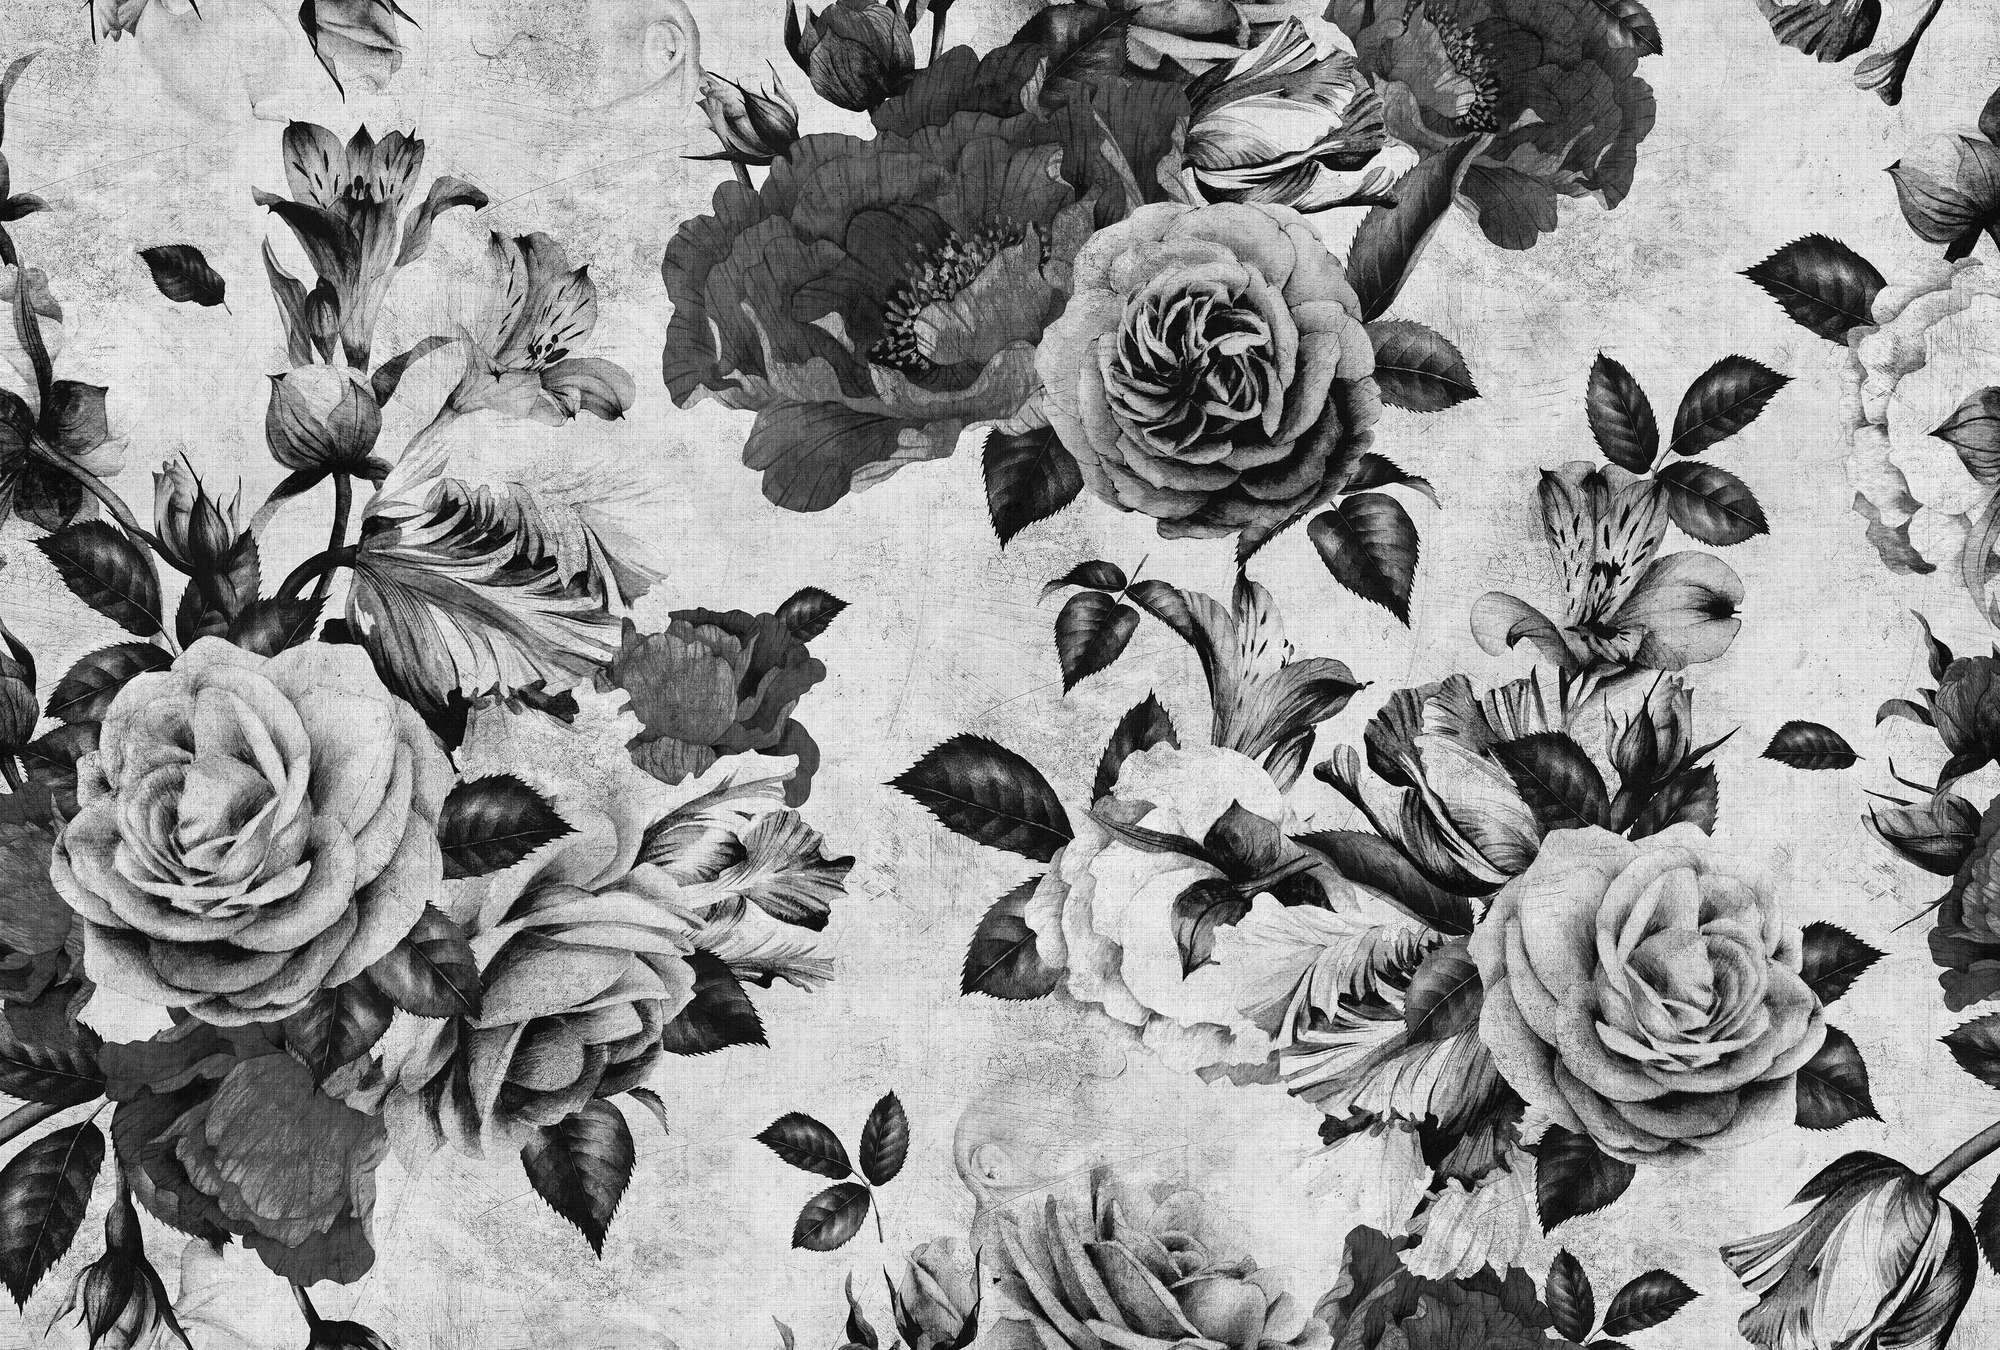             Rosa española 1 - Papel pintado Rosa con flores blancas y negras en estructura de lino natural - Gris, Negro | Vellón liso Premium
        